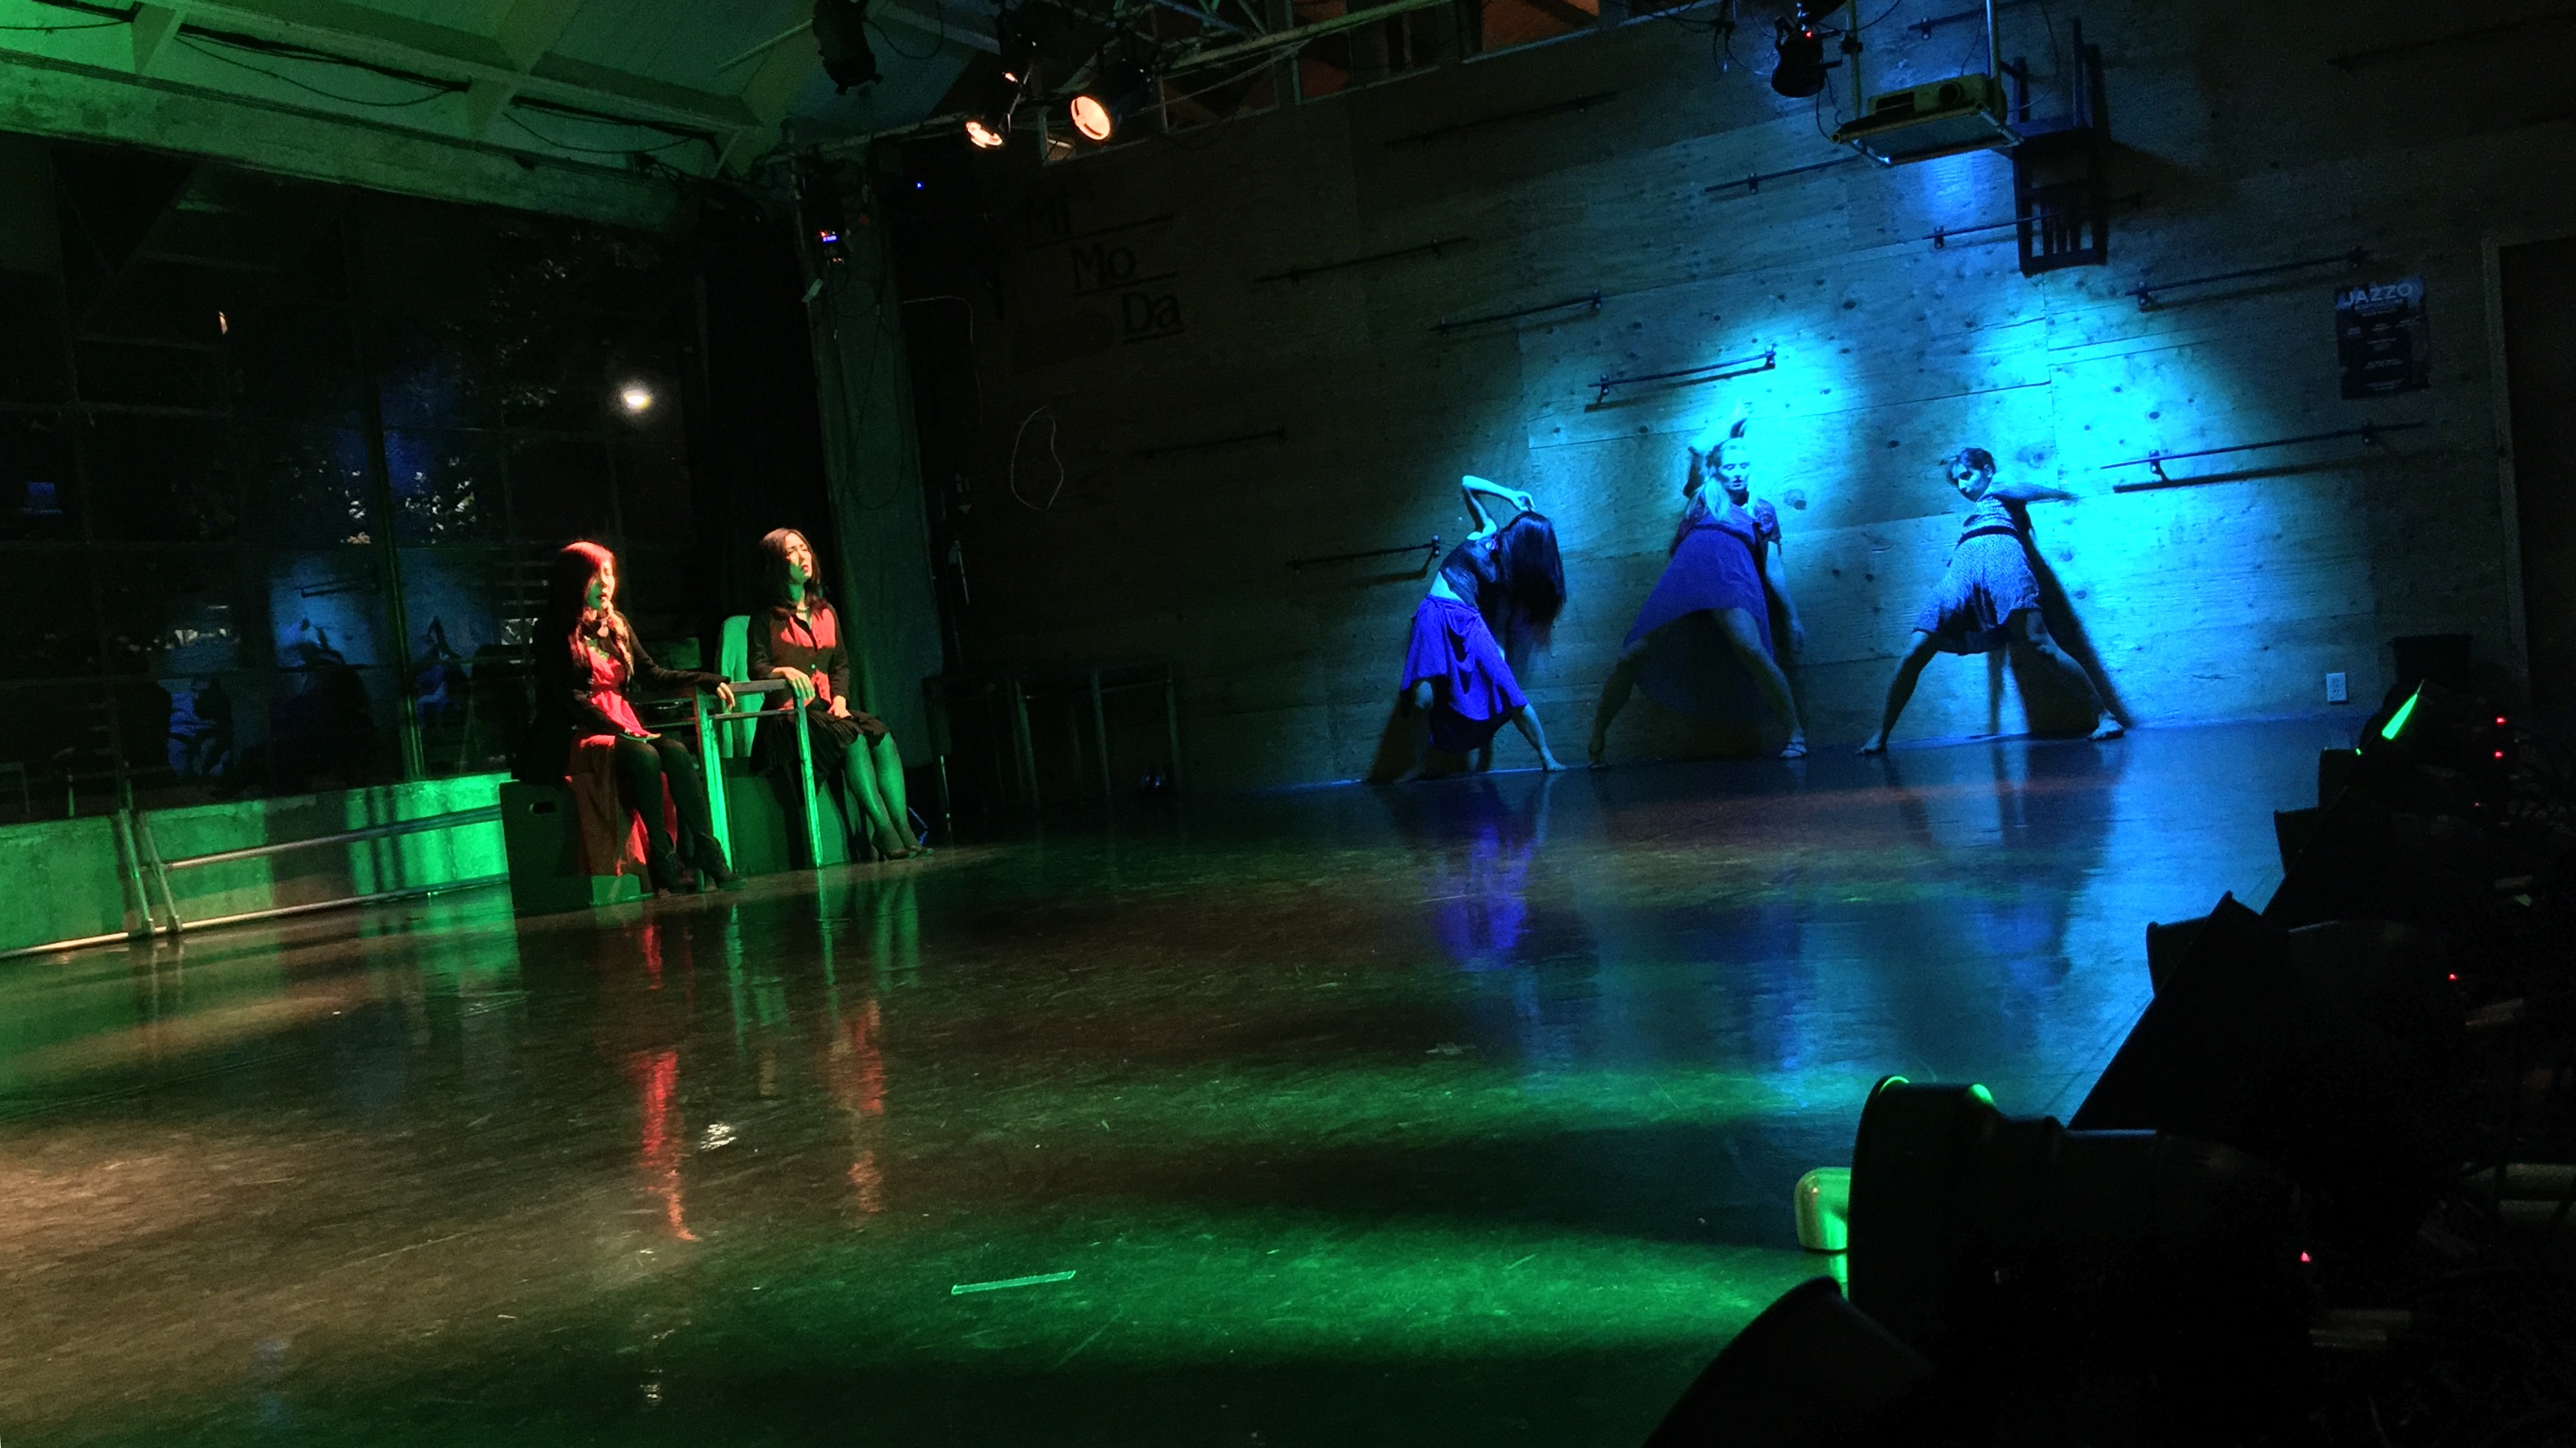 Mimoda Jazzo Theater-The Performance